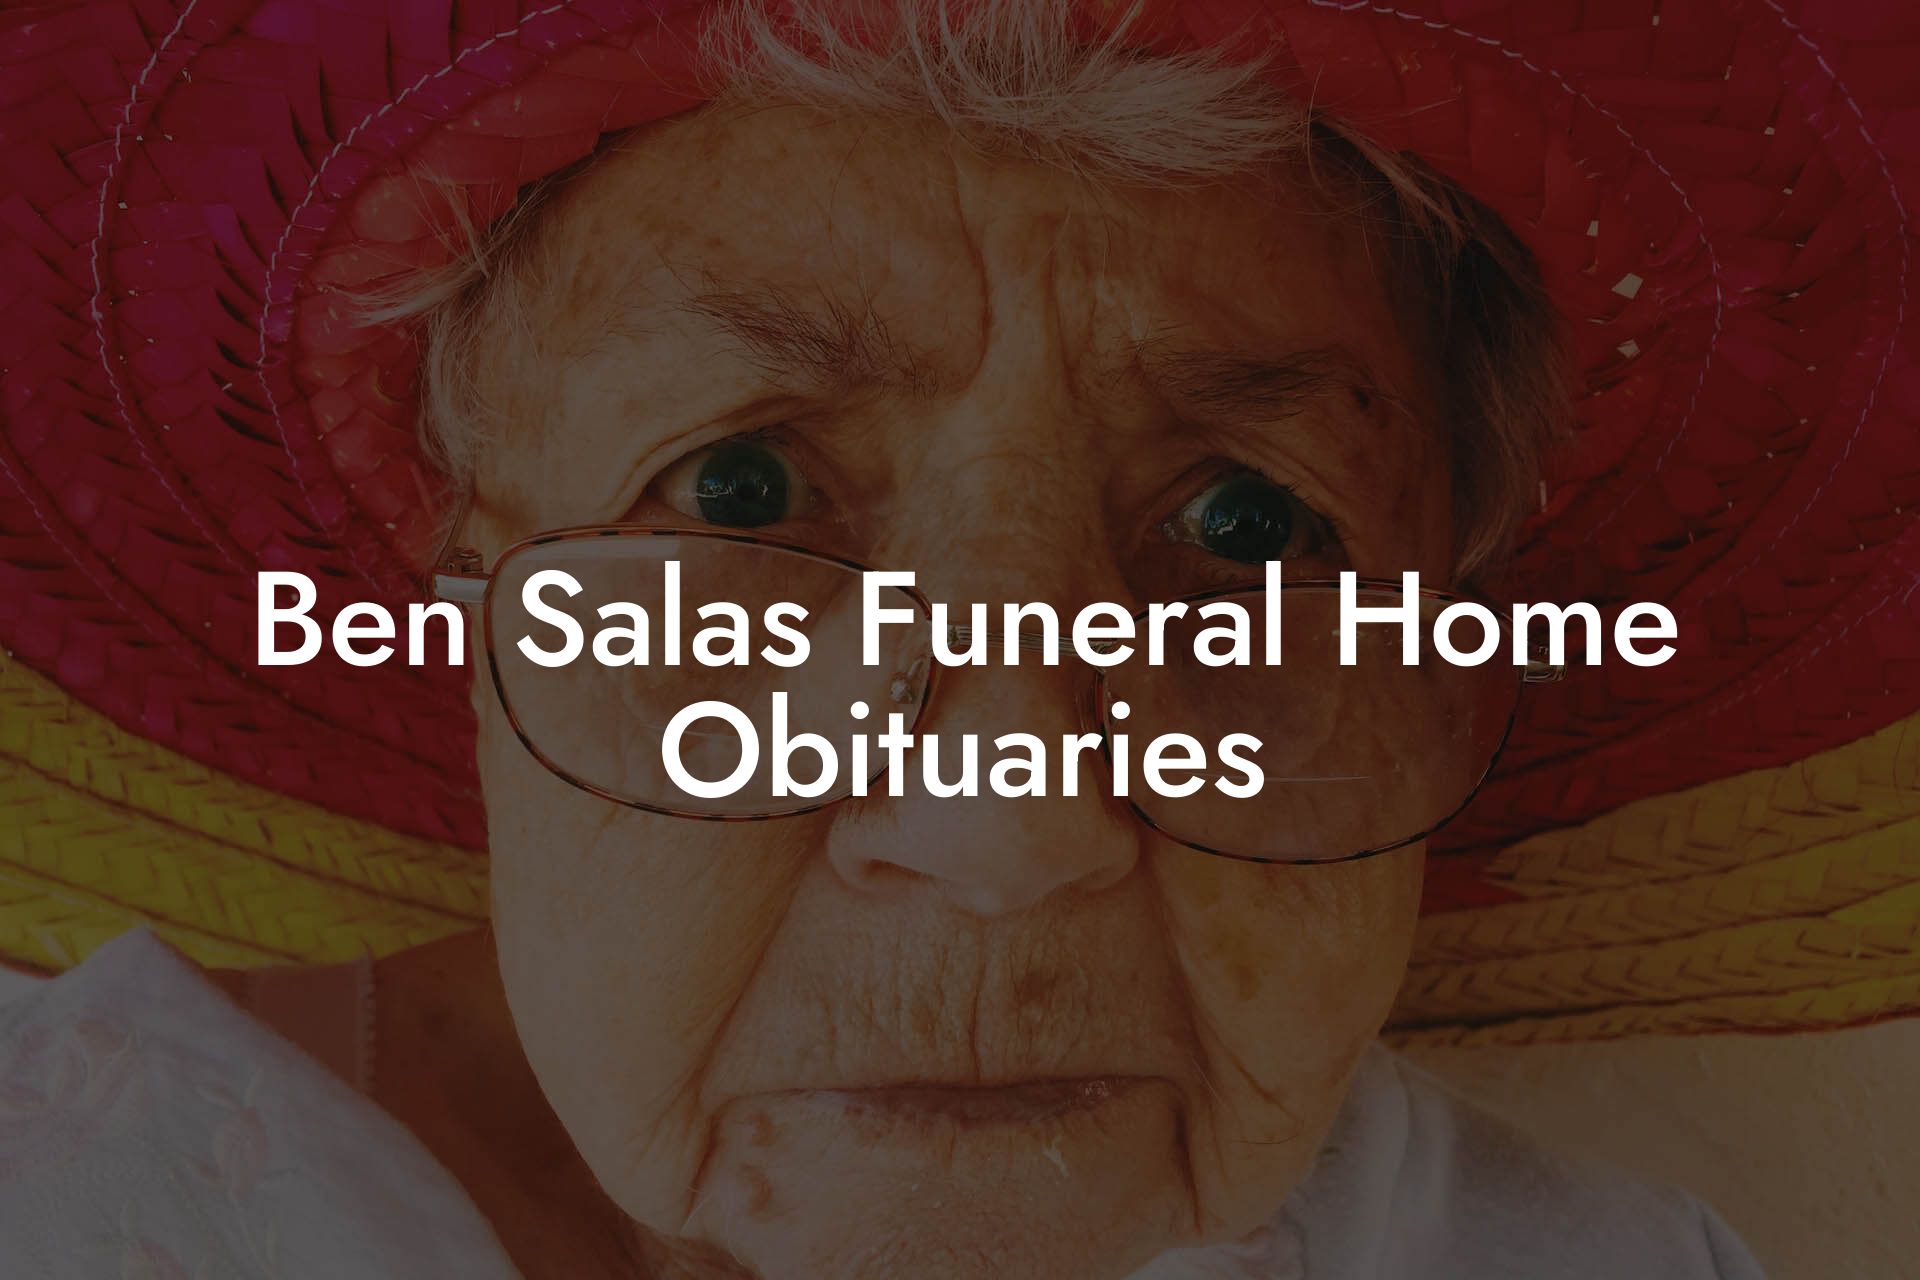 Ben Salas Funeral Home Obituaries